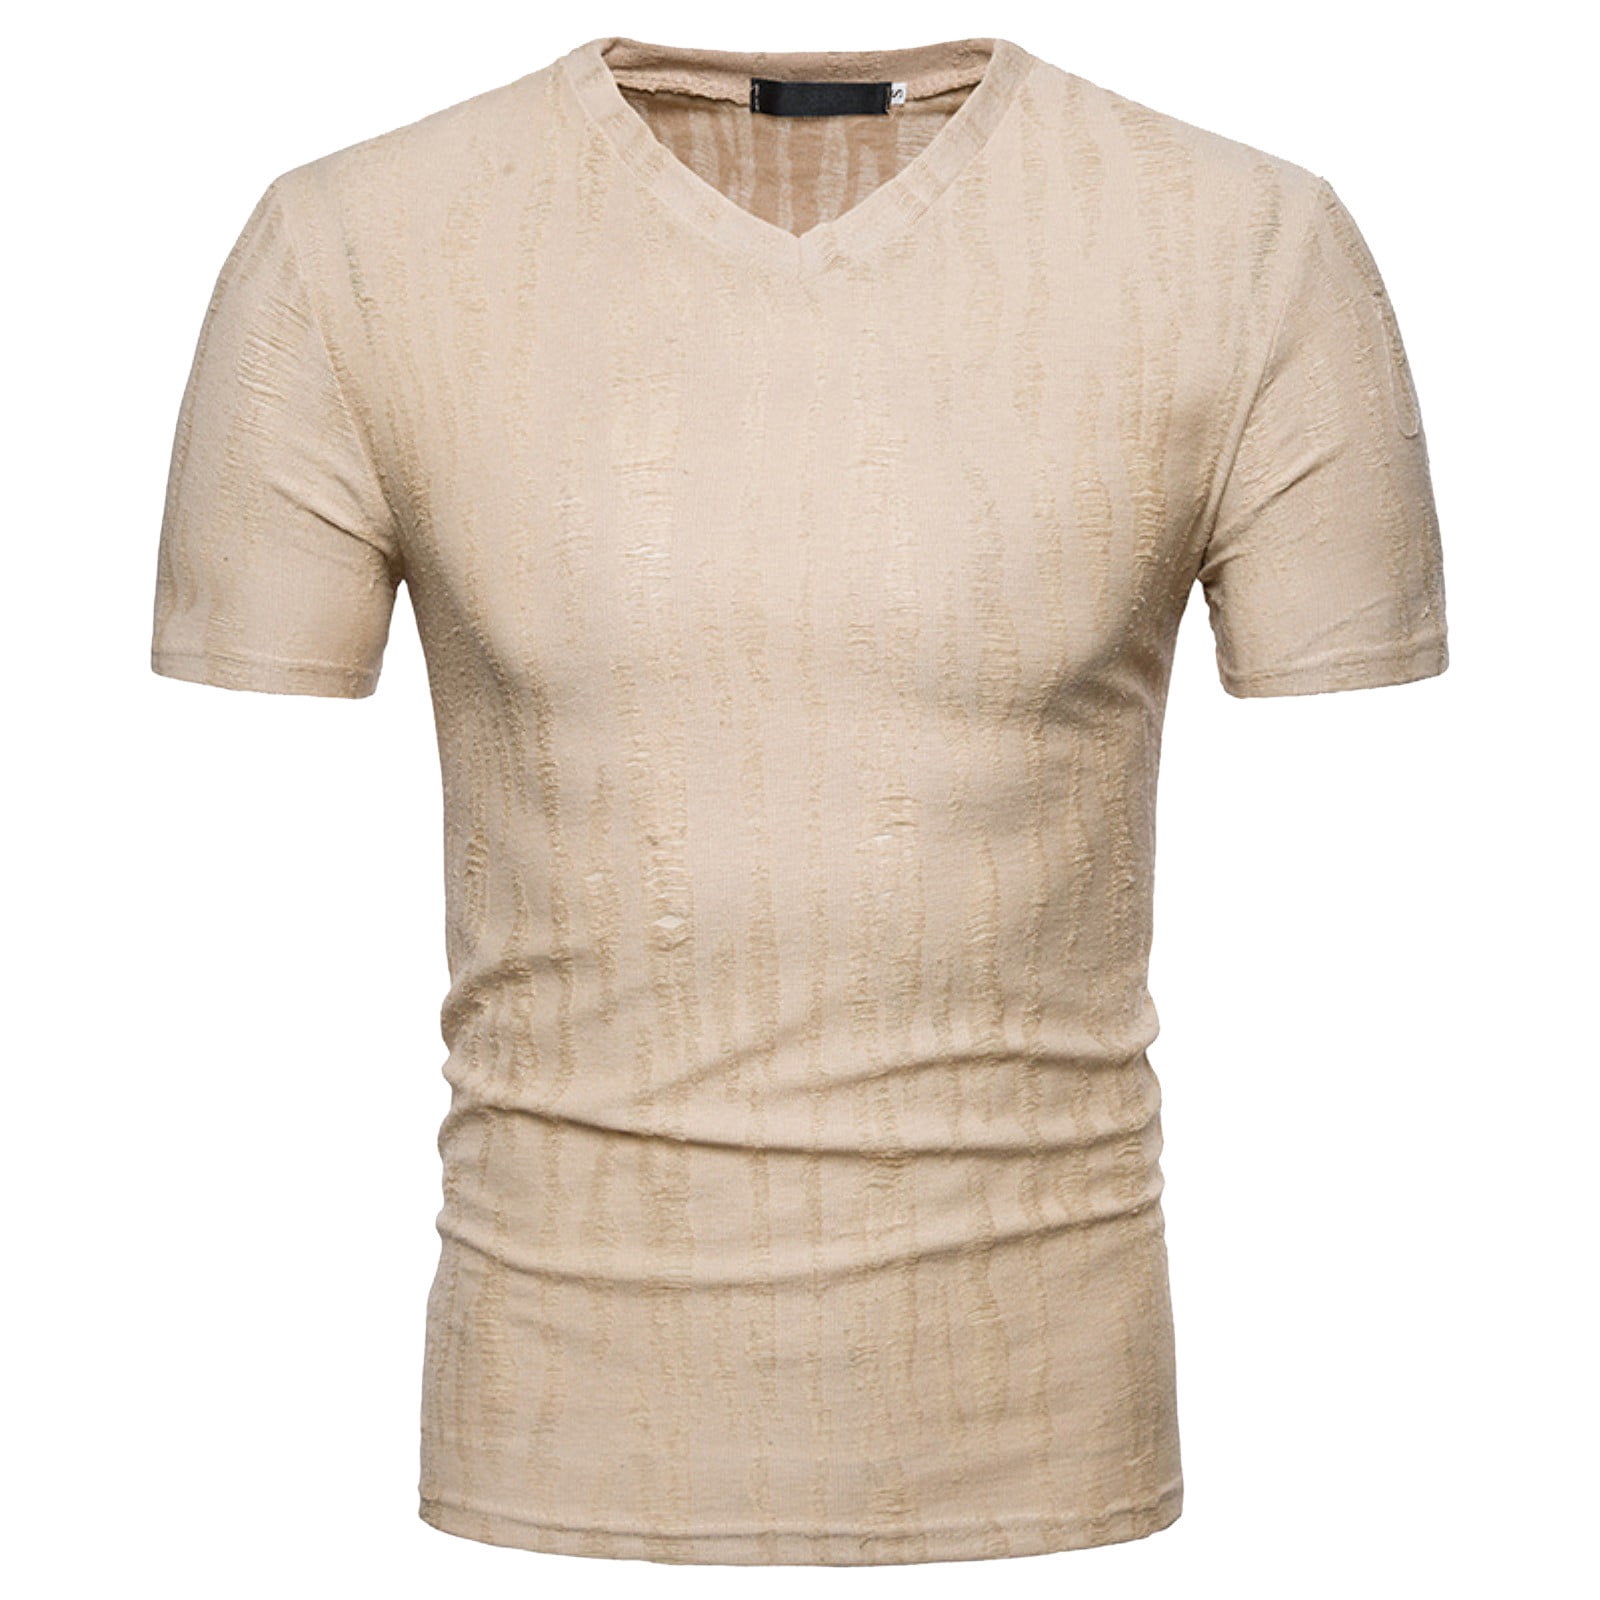 Men's Fashion Tee Shirts Summer 3D Printed Short Sleeve Blouse Crew ...